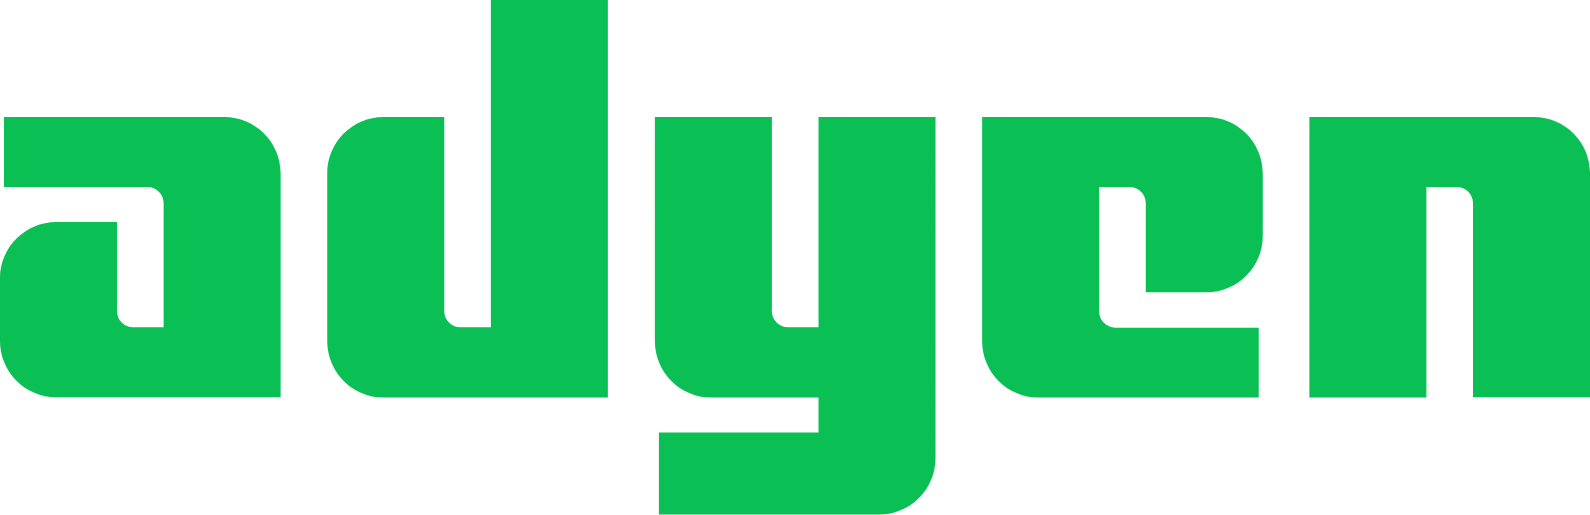 Adyen logo large (transparent PNG)